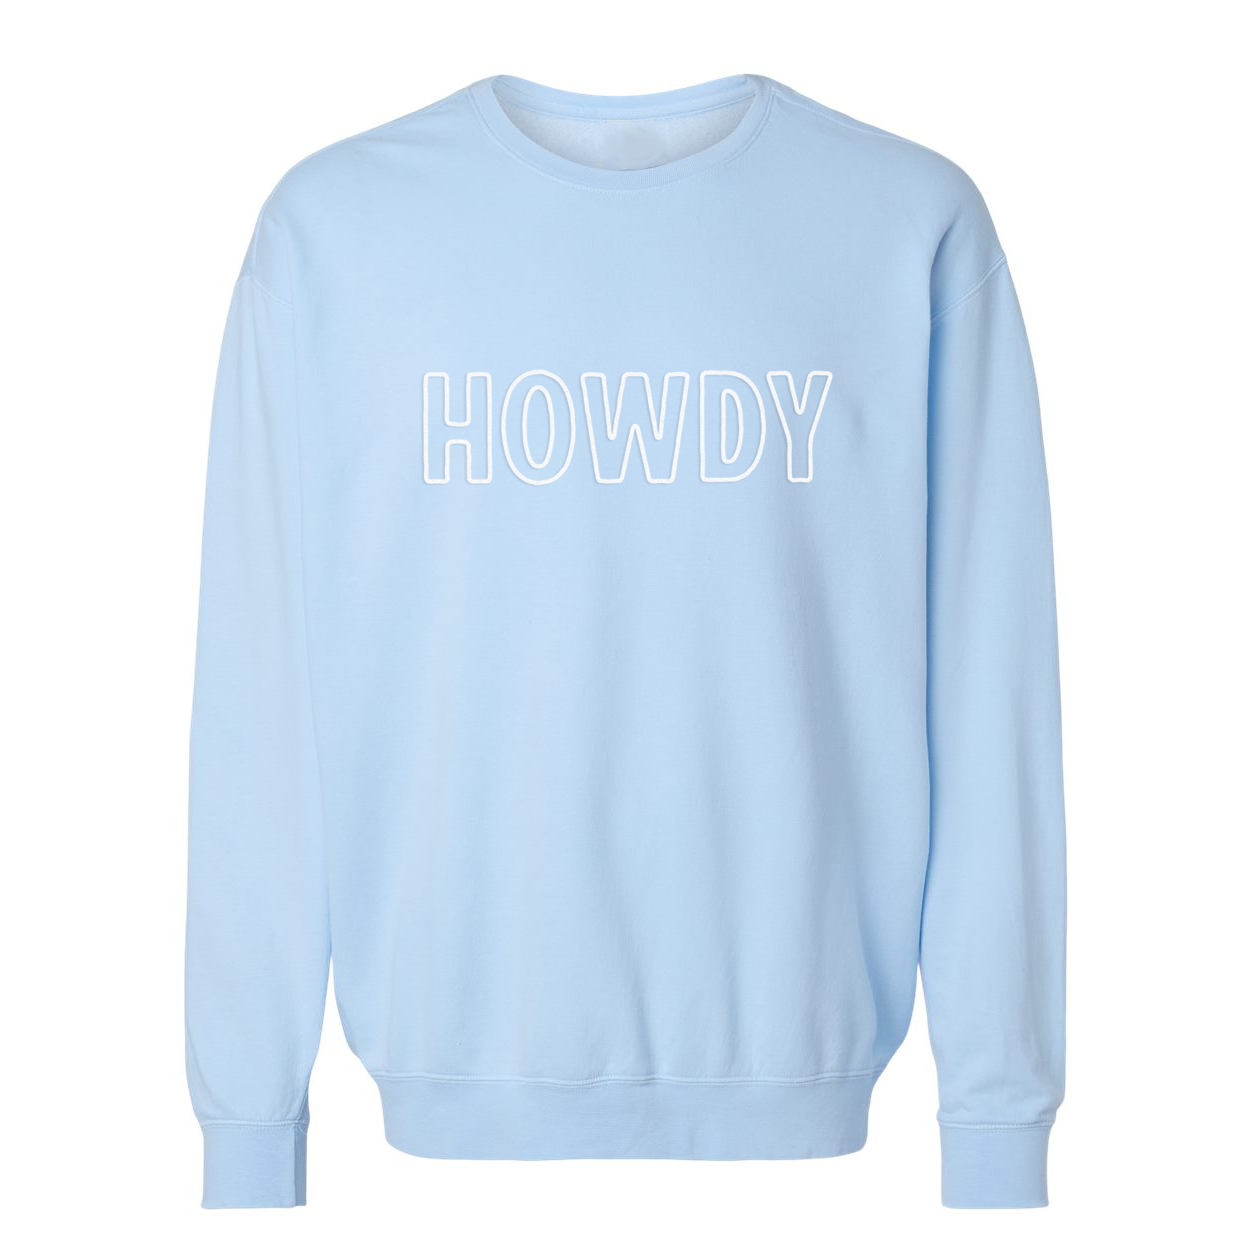 Howdy Outline Washed Sweatshirt